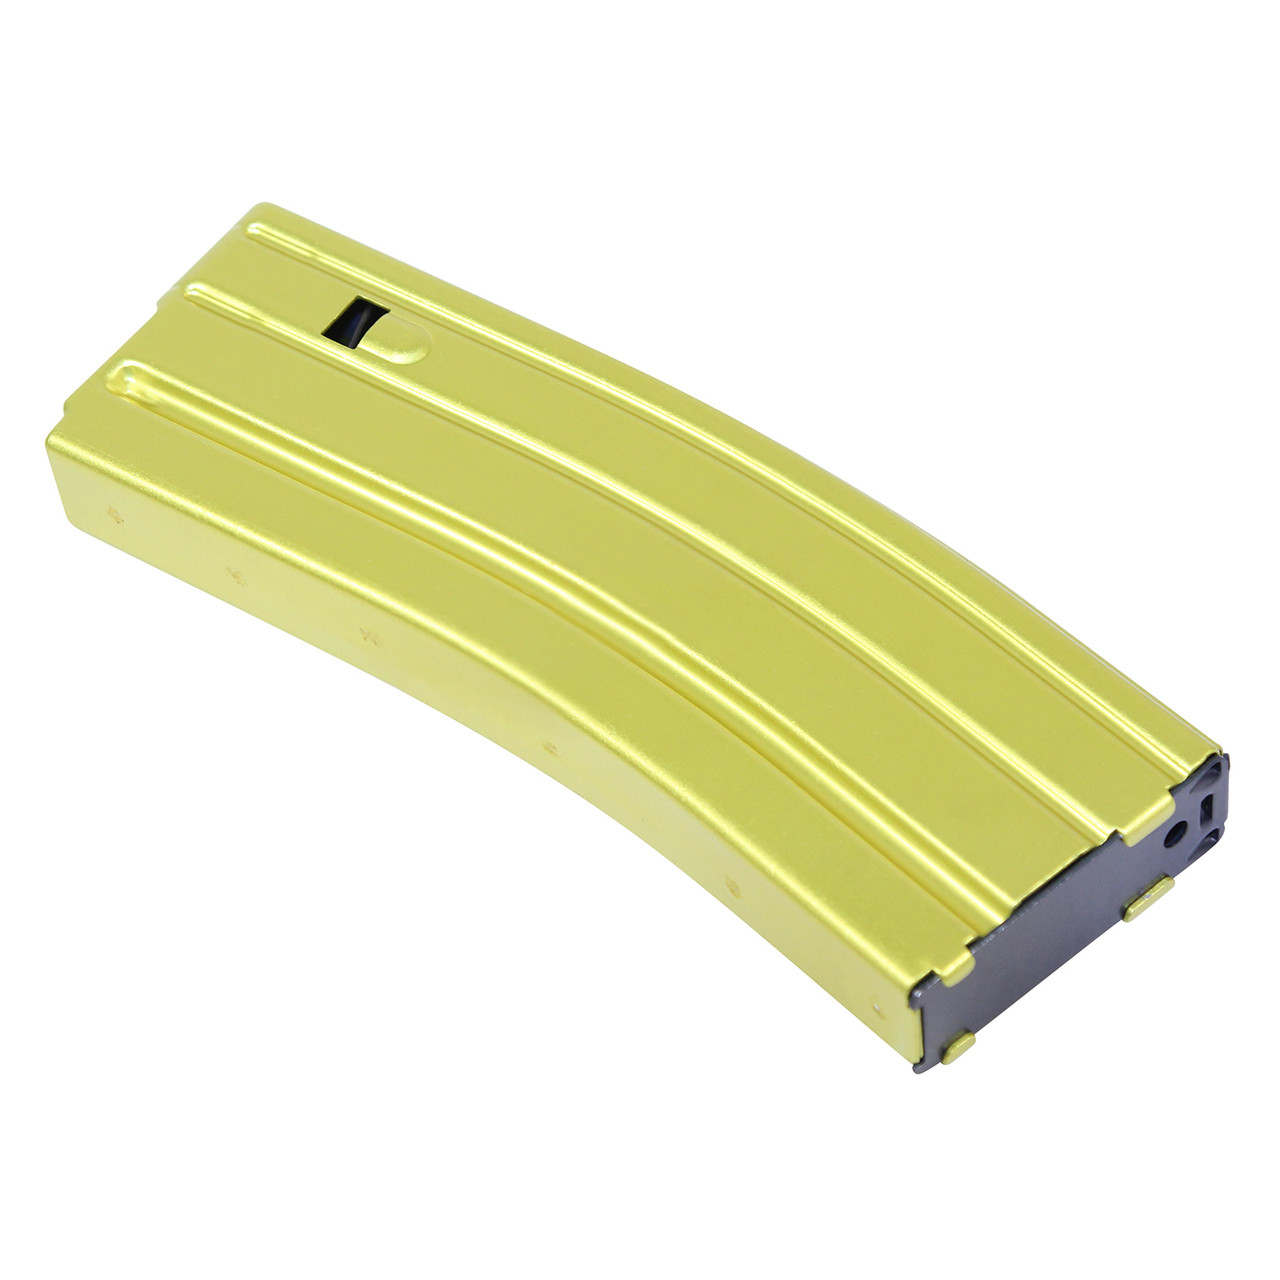 Guntec USA MAG30-NY AR 5.56 Cal Aluminum 30 Rnd Mag With Anti-Tilt Follower (Anodized Neon Yellow)